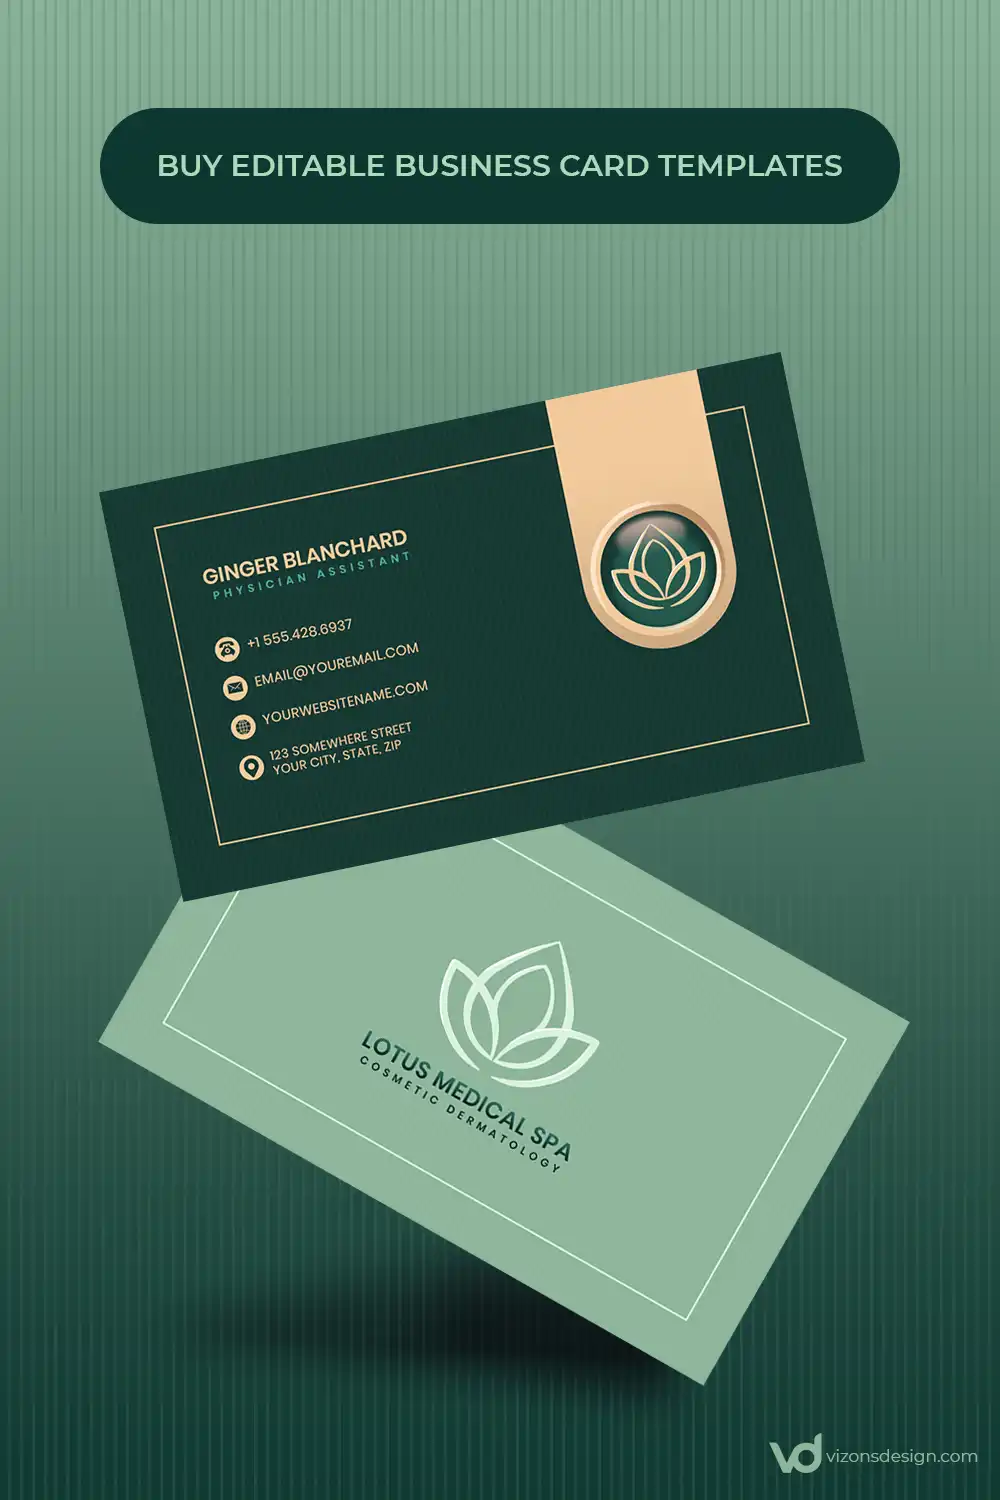 Lotus Jade Spa Business Card Template